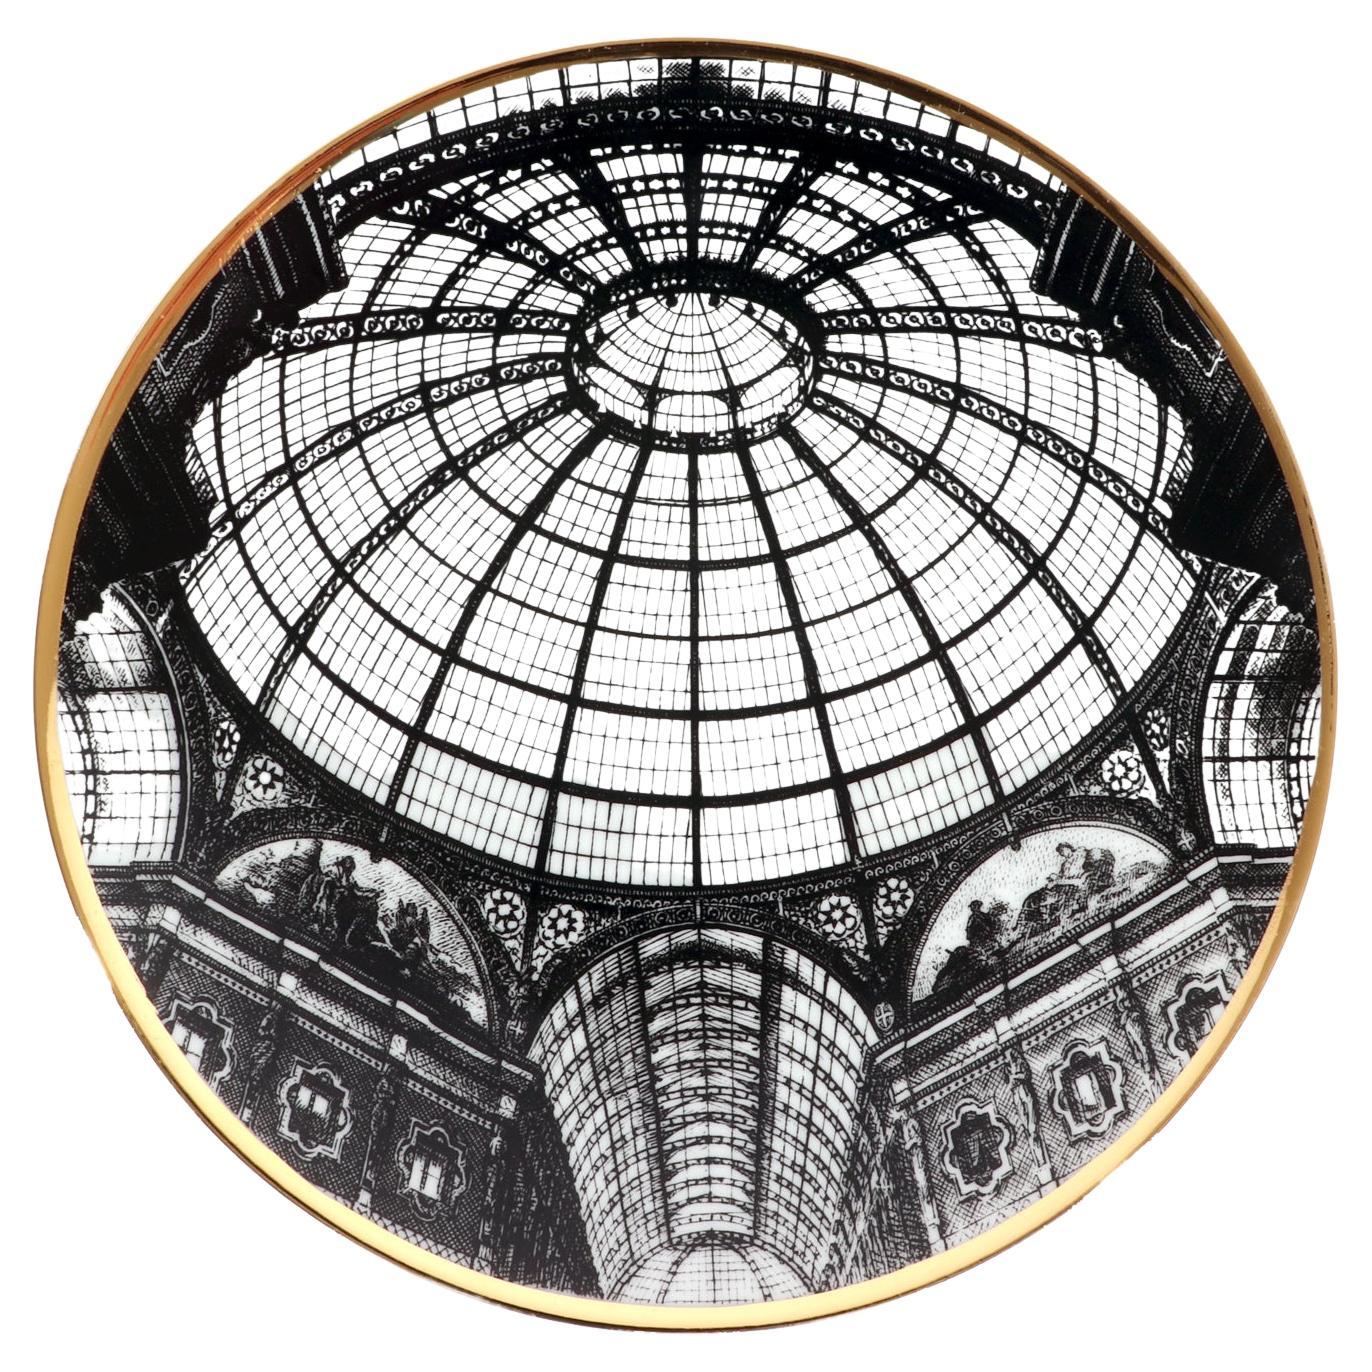 Fornasetti Dome Plate, Cupola Galleria Di Milano Number 7 in Series For Sale